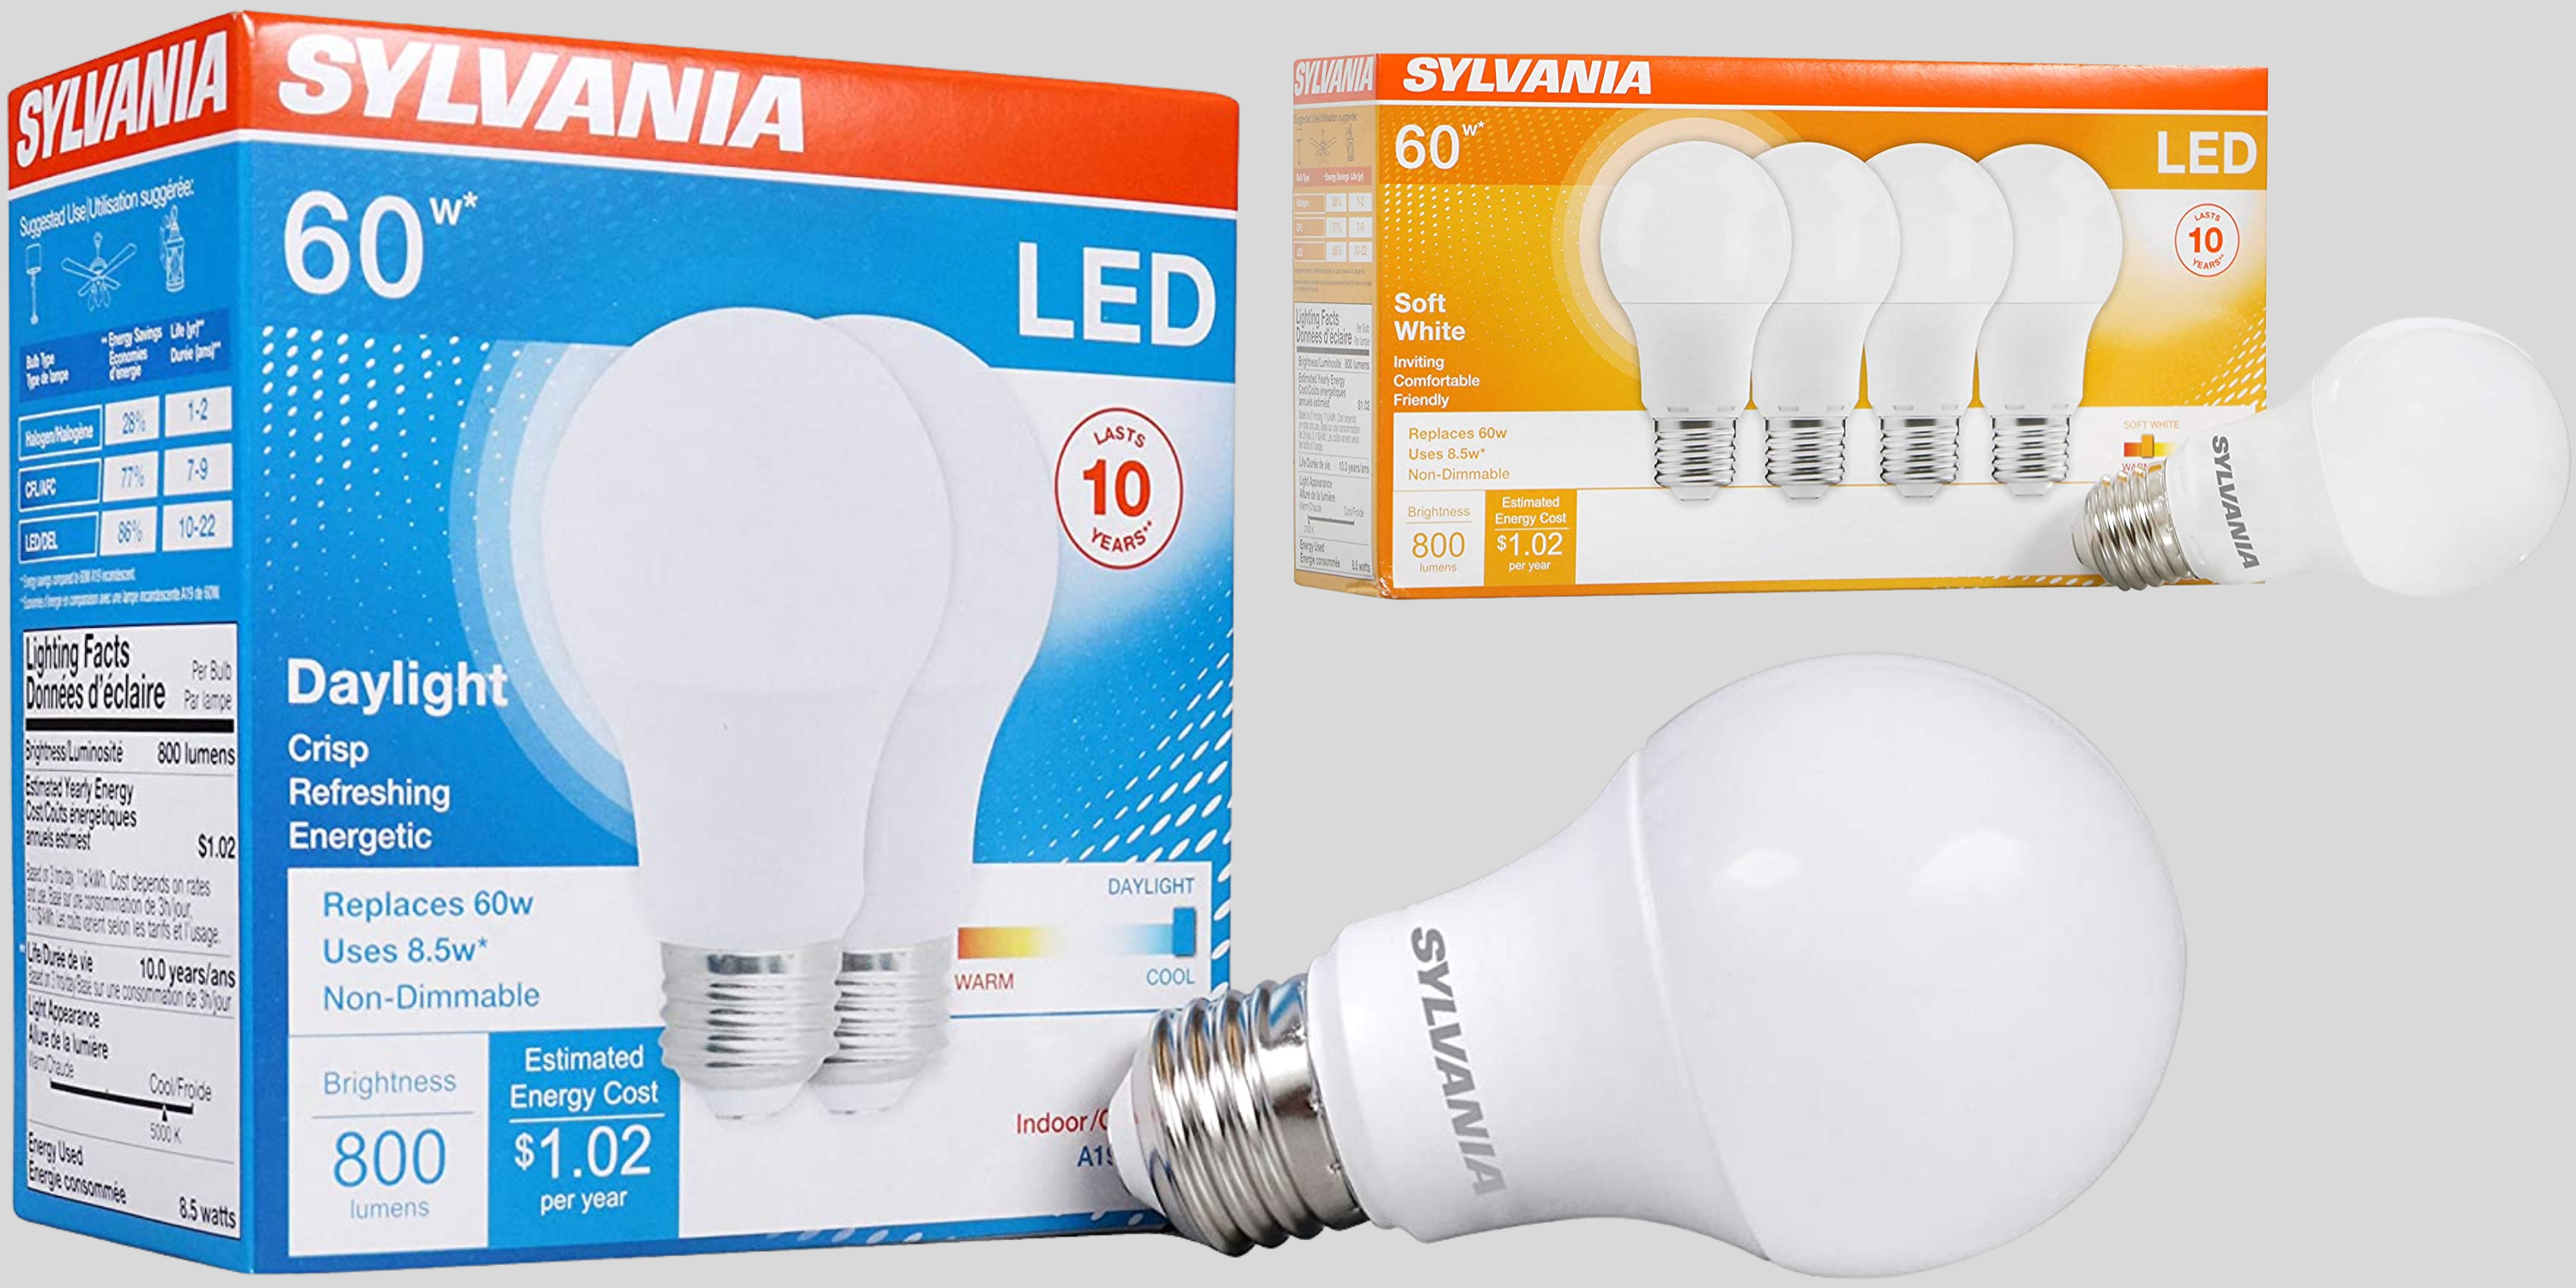 Sylvania LED Bulbs: Is it a Good Choice for your home?